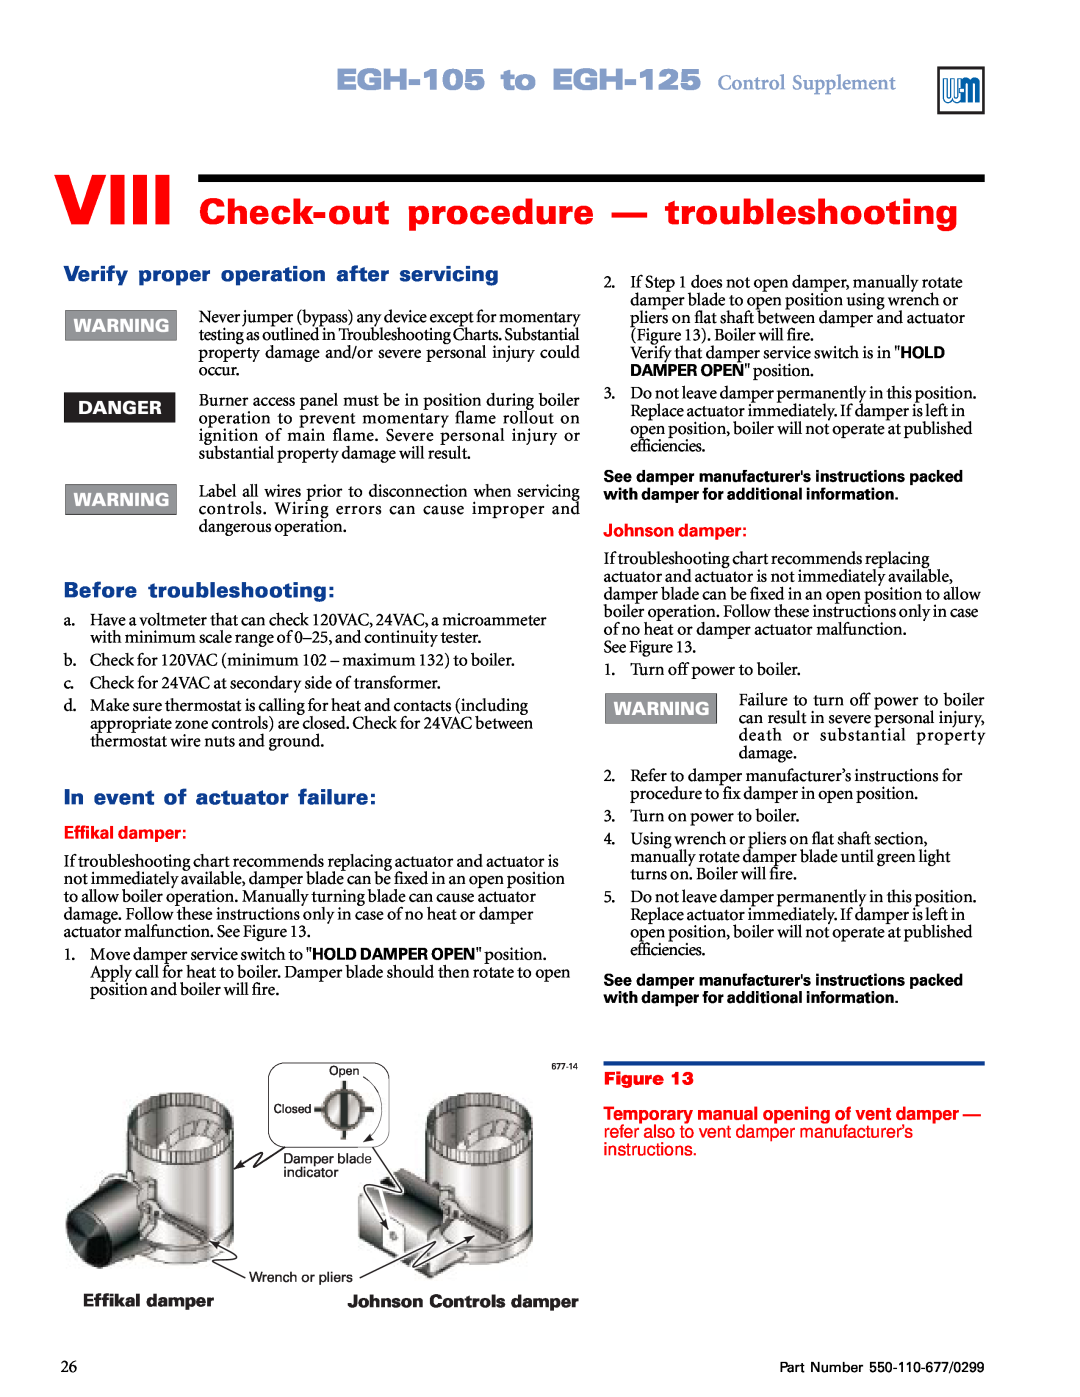 Weil-McLain EGH-105 VIII Check-outprocedure - troubleshooting, Verify proper operation after servicing, Effikal damper 